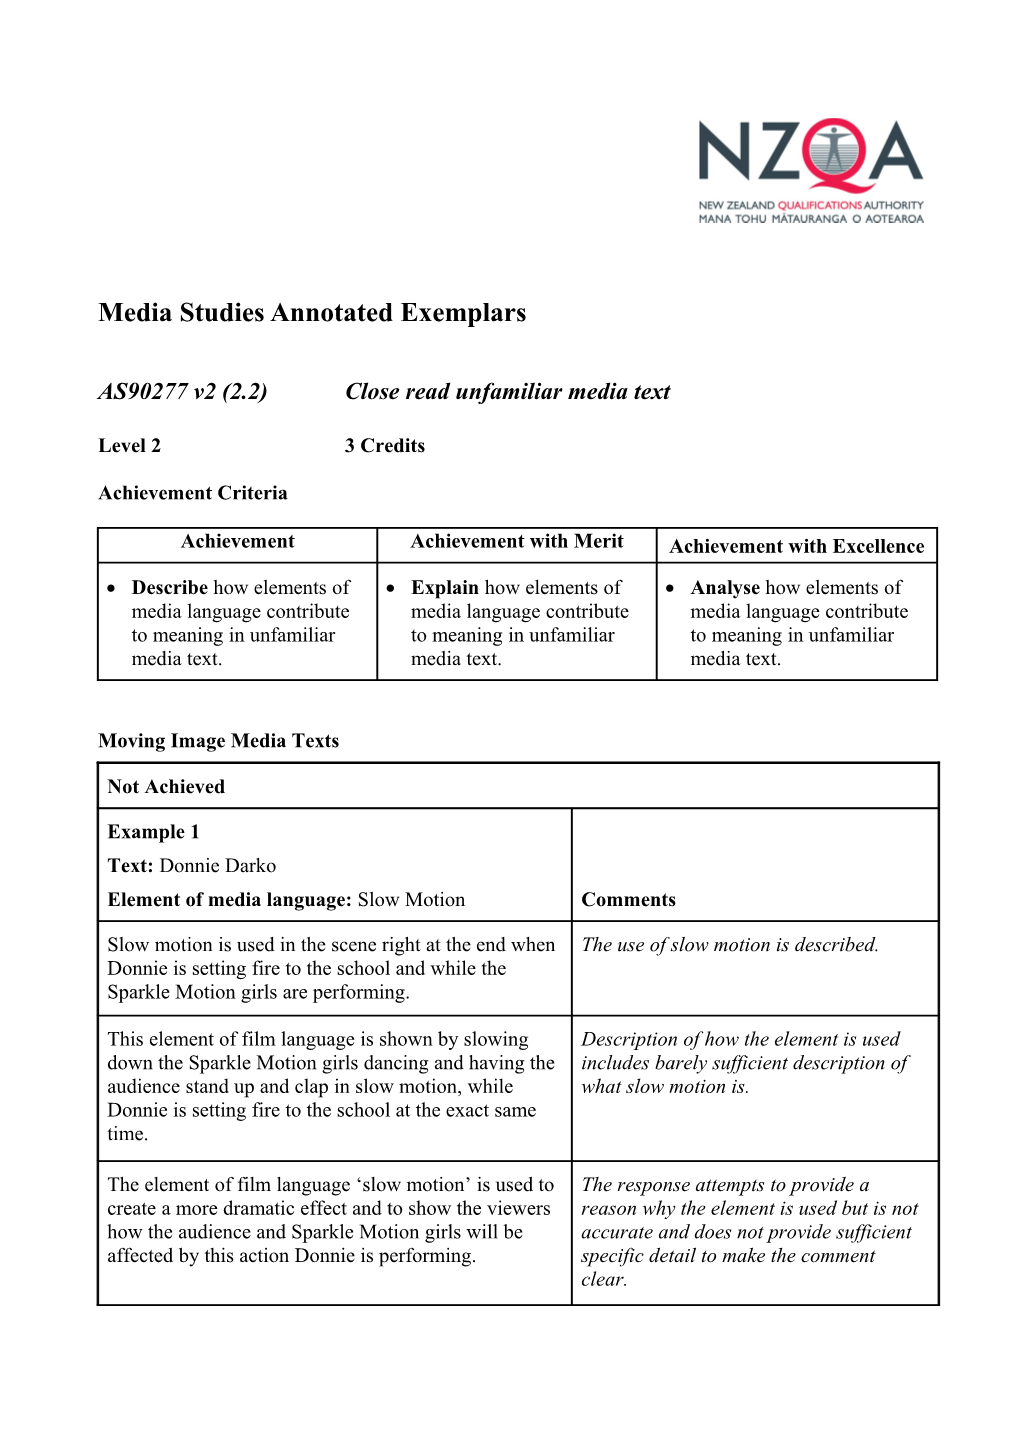 Media Studies Annotated Exemplars - AS90277 V2 (2.2) Close Read Unfamiliar Media Text